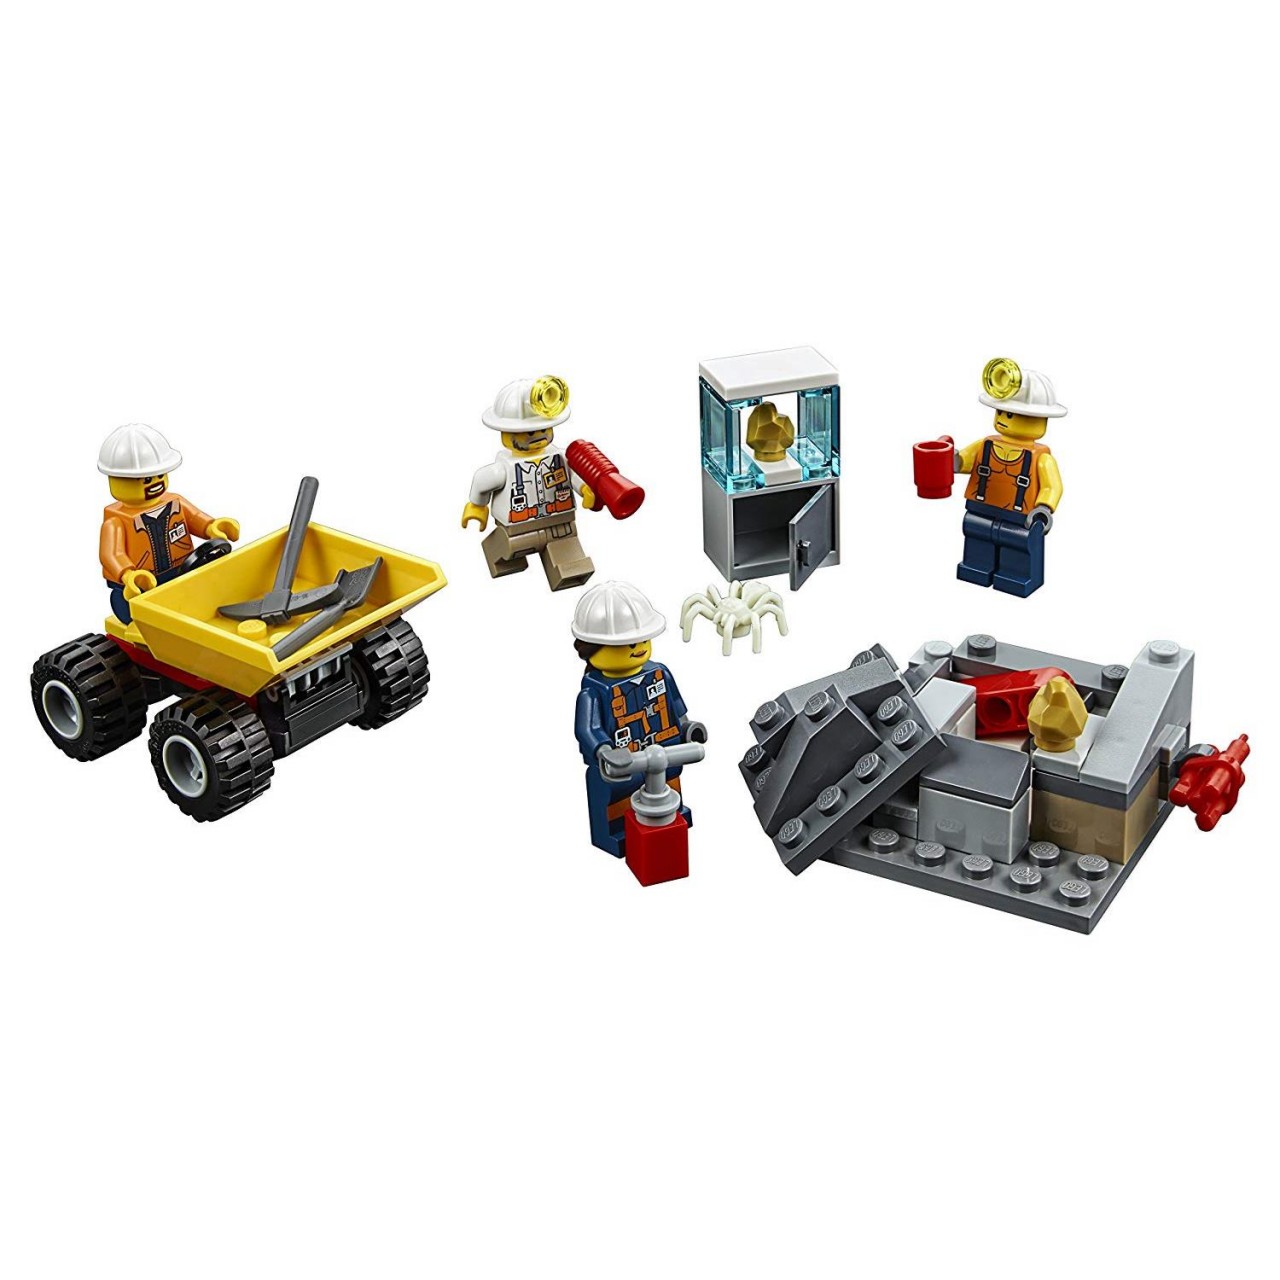 LEGO CITY 60184 Bergbauteam